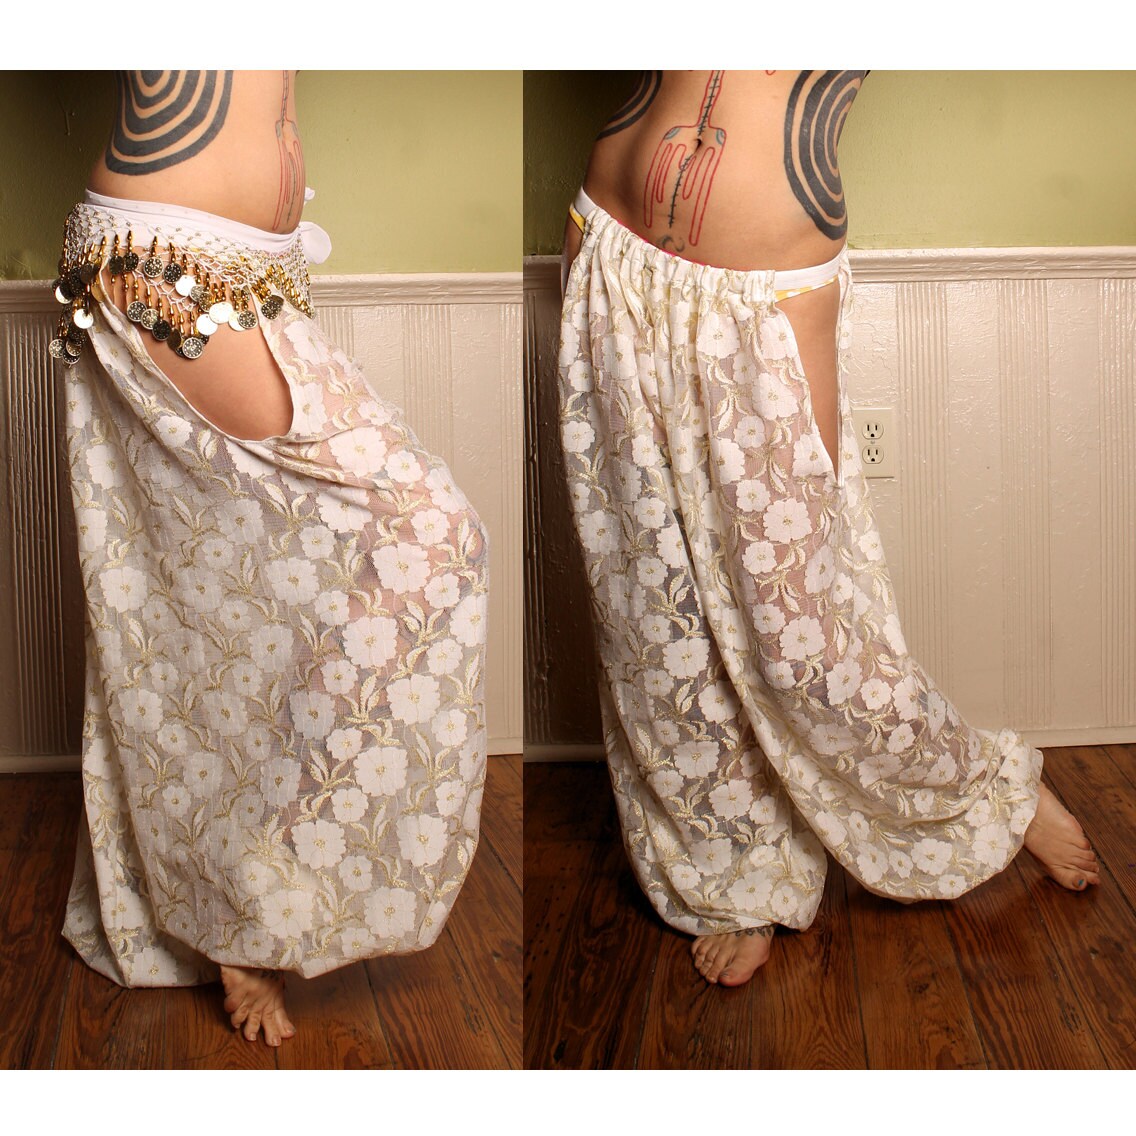 Tribal Belly Dance Harem Pants Cream Gold Lace cut out leg.